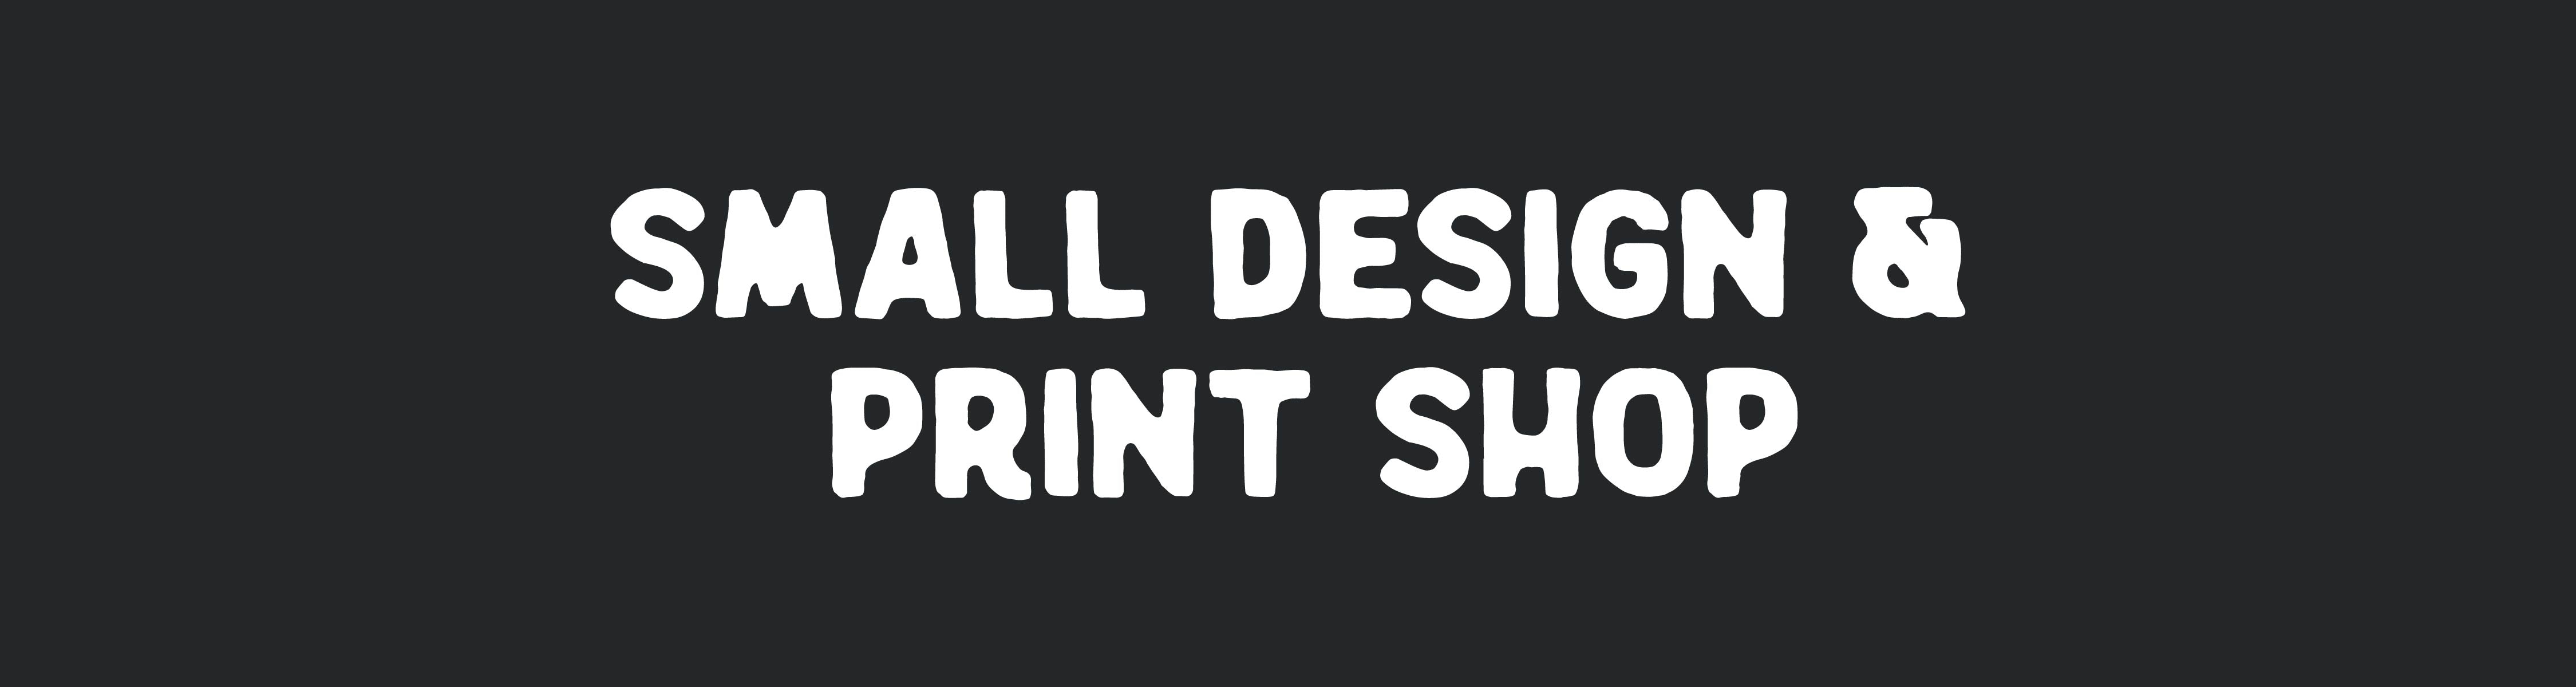 Becker Press - Small Design & Print Shop